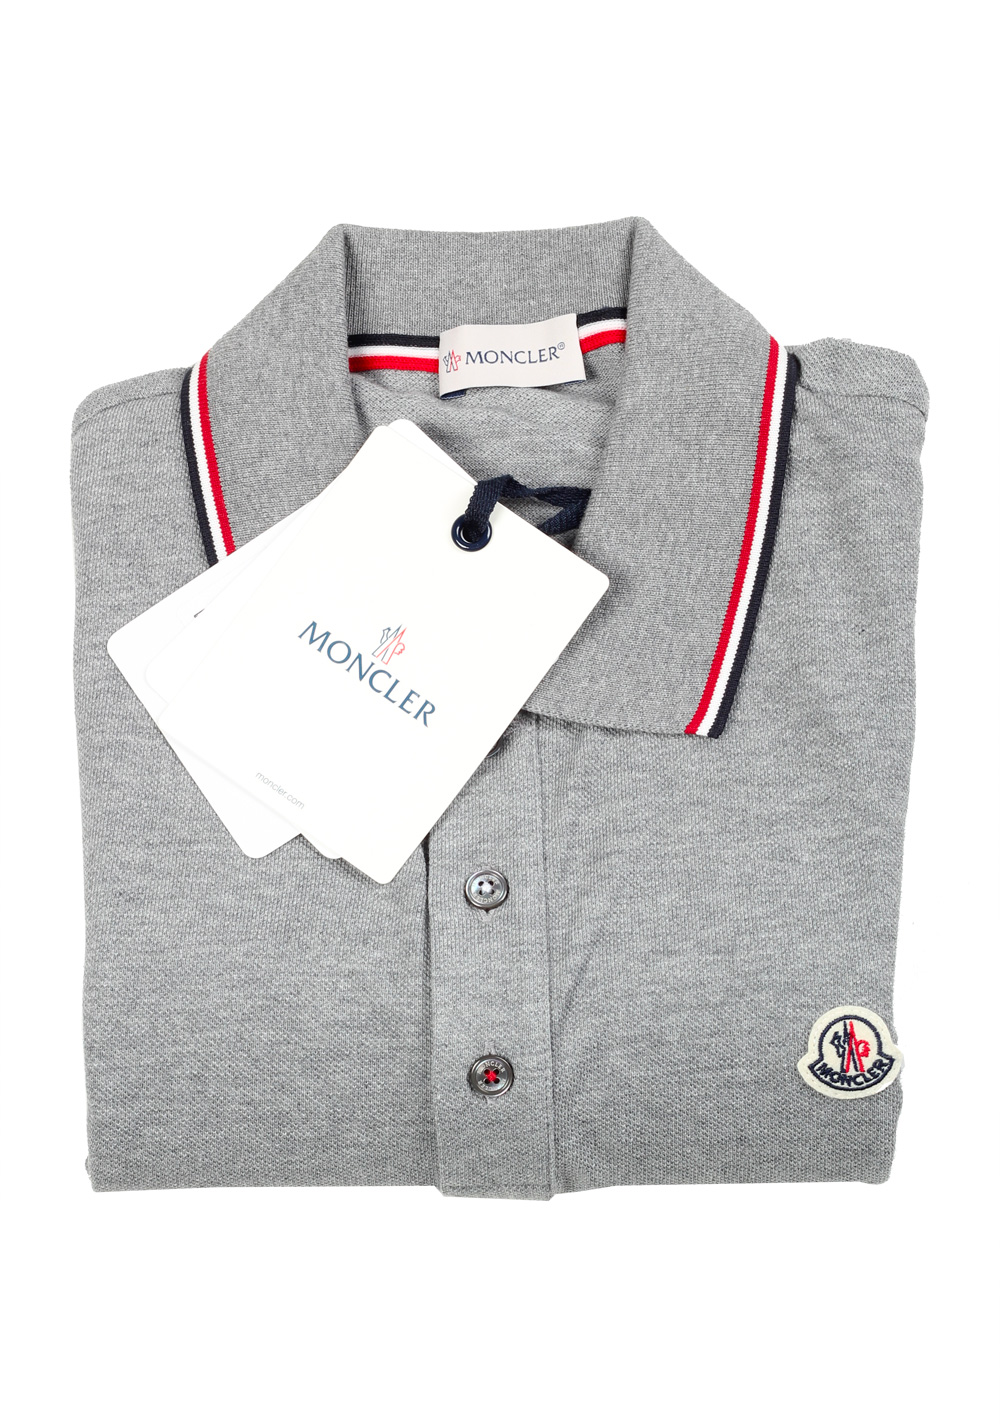 Moncler Gray Long Sleeve Polo Shirt Size XL / 42R U.S. | Costume Limité